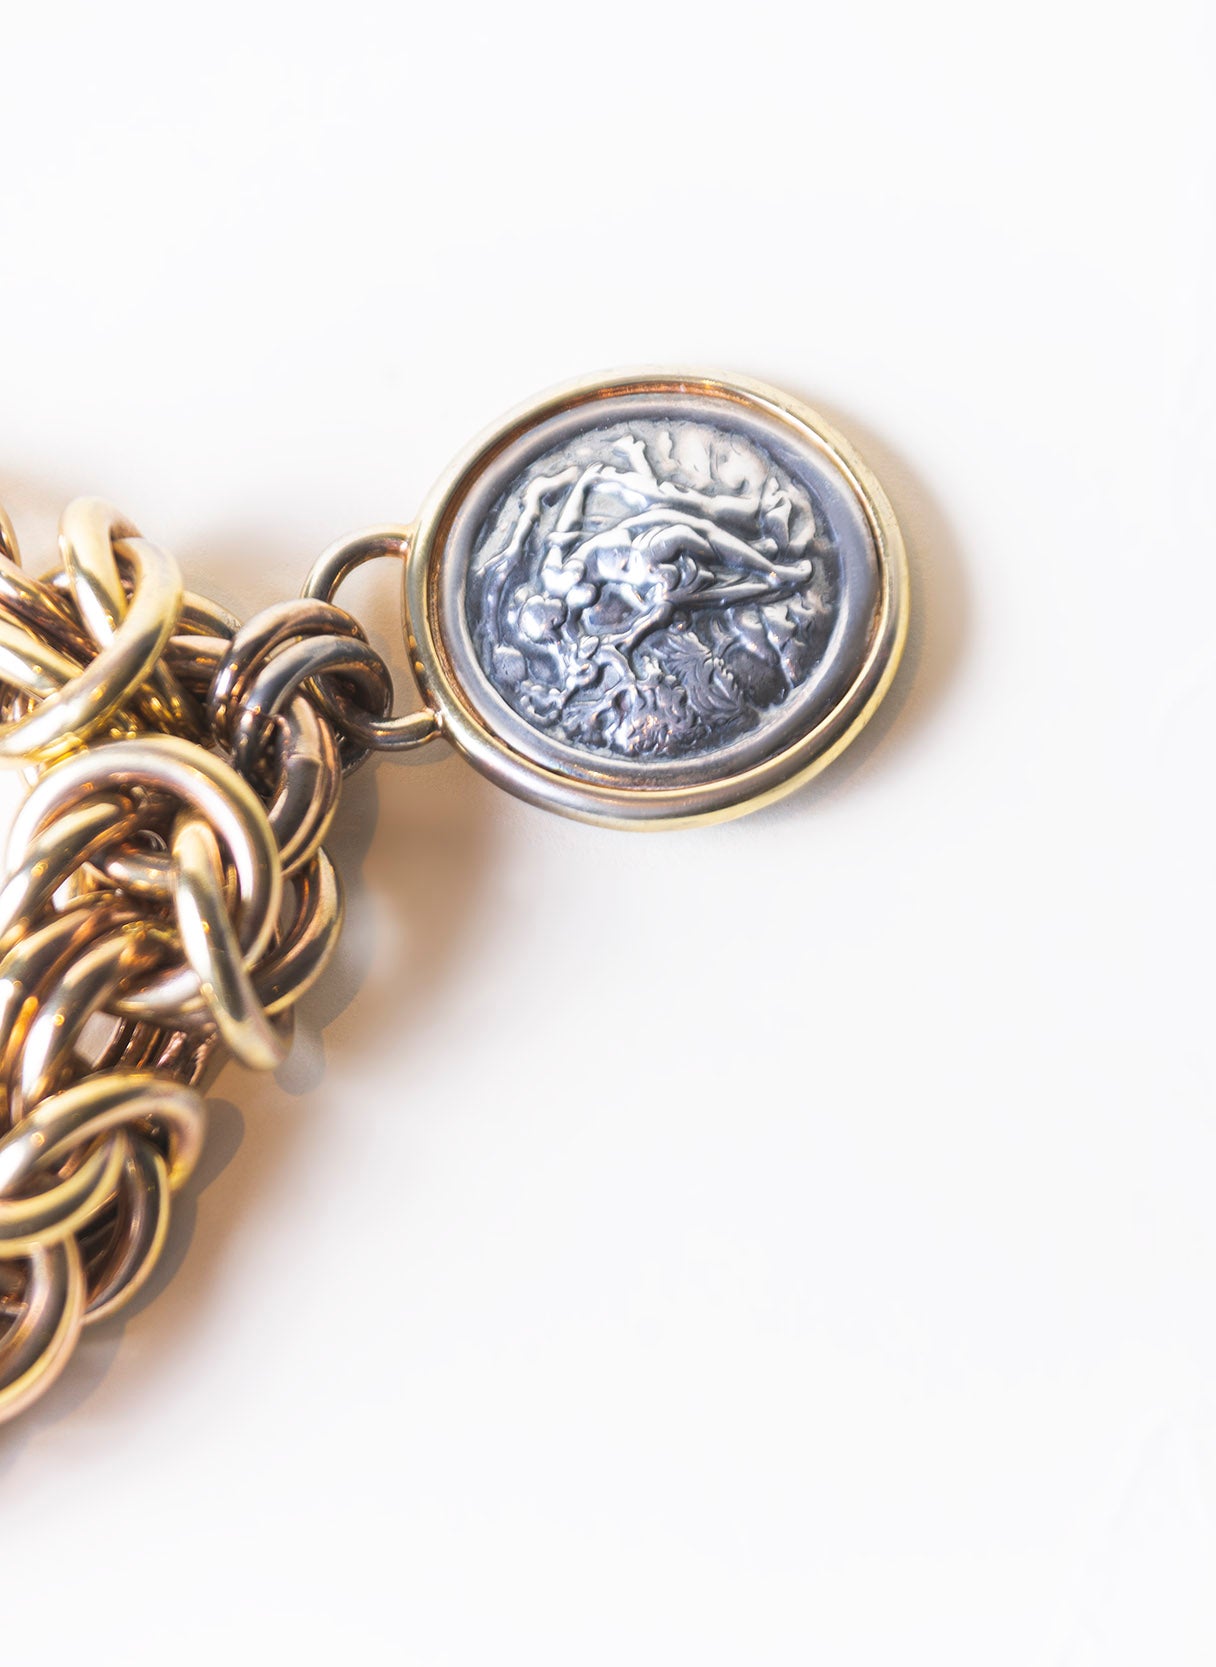 Dante Roman Coins Bracelet in Silver